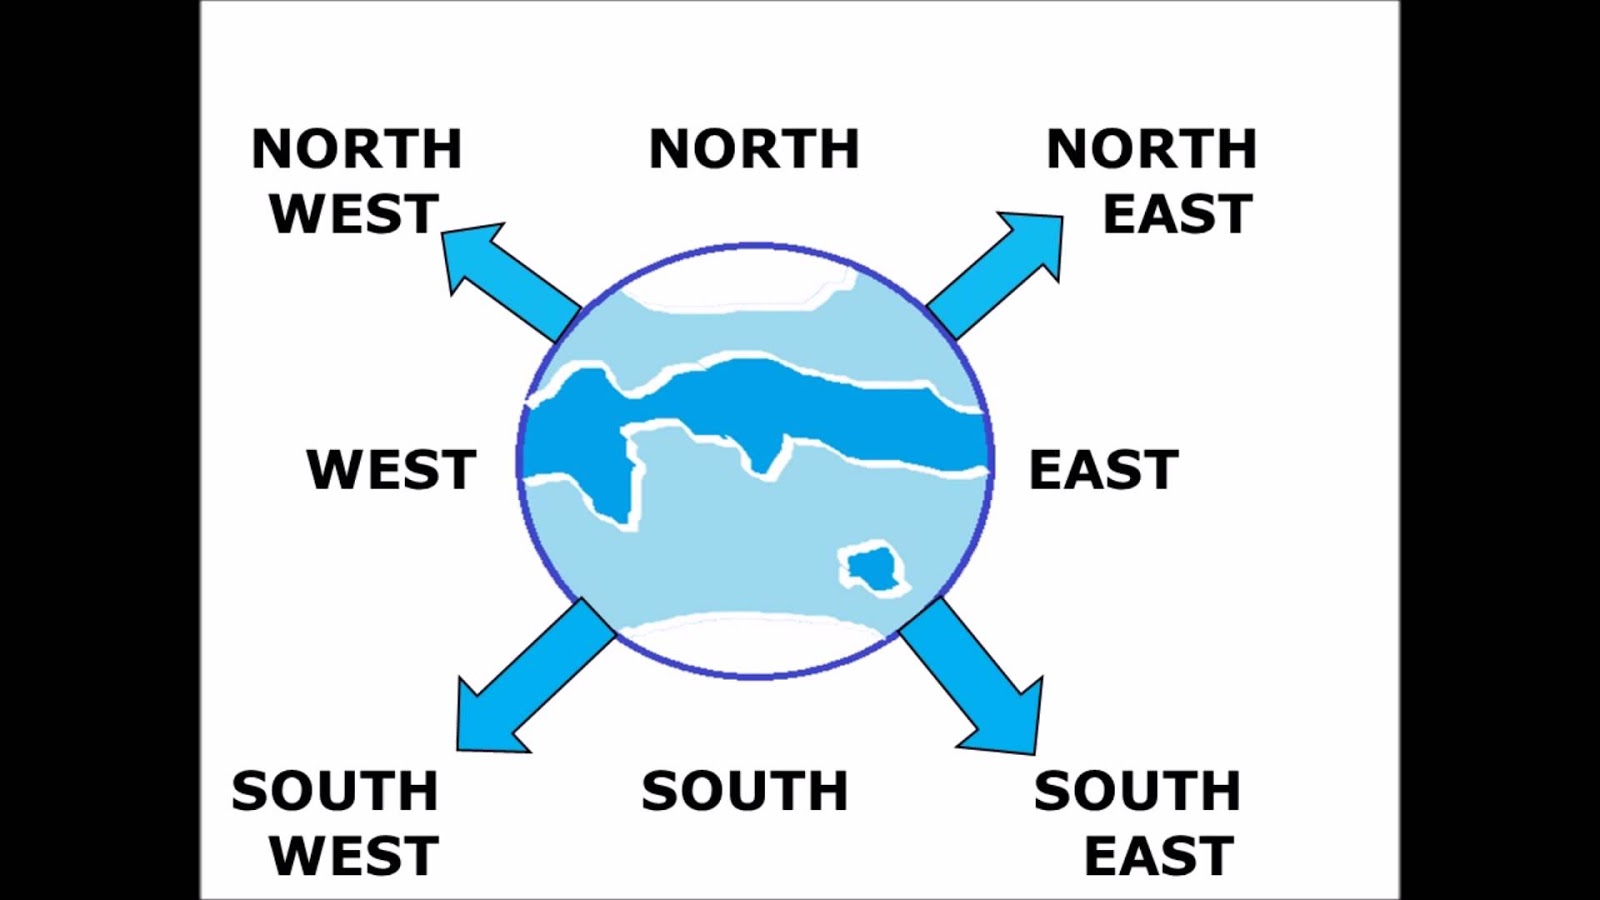 Юг запад на английском языке. South East West. North South East West. South-West East South North-East North South-East West.